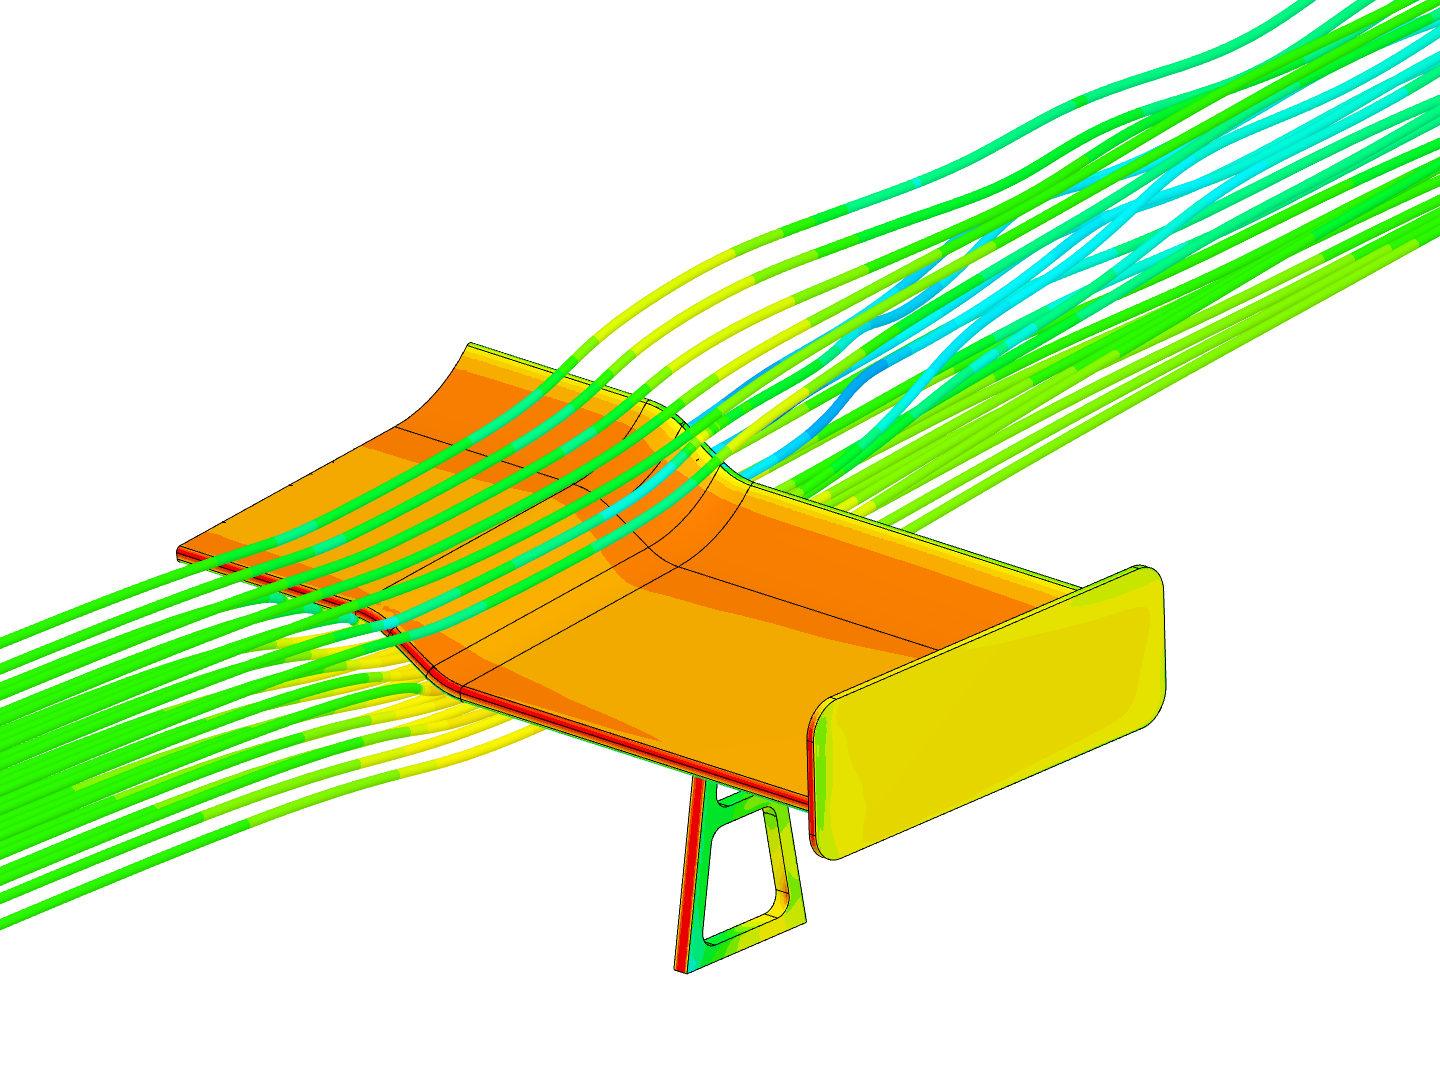 Cousera-airflow around a Gt car spoiler image